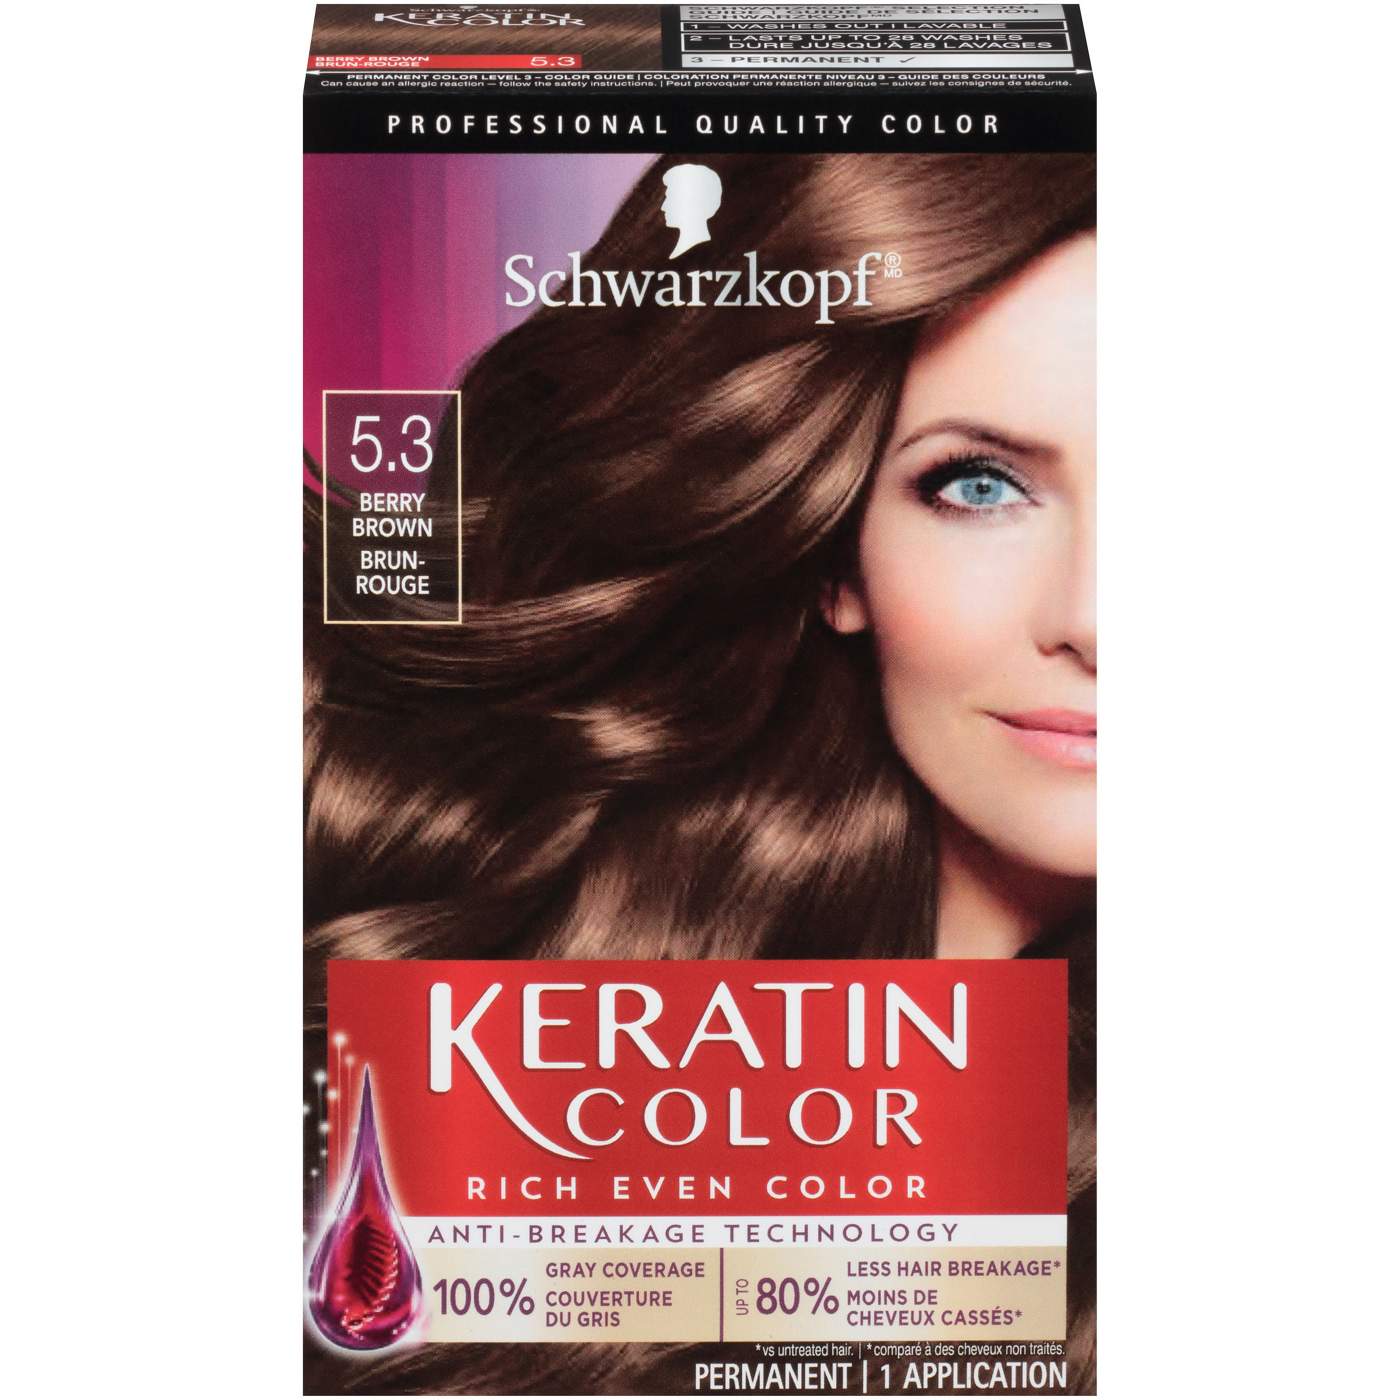 Schwarzkopf Keratin Color Permanent Hair Color - 5.3 Berry Brown; image 1 of 5